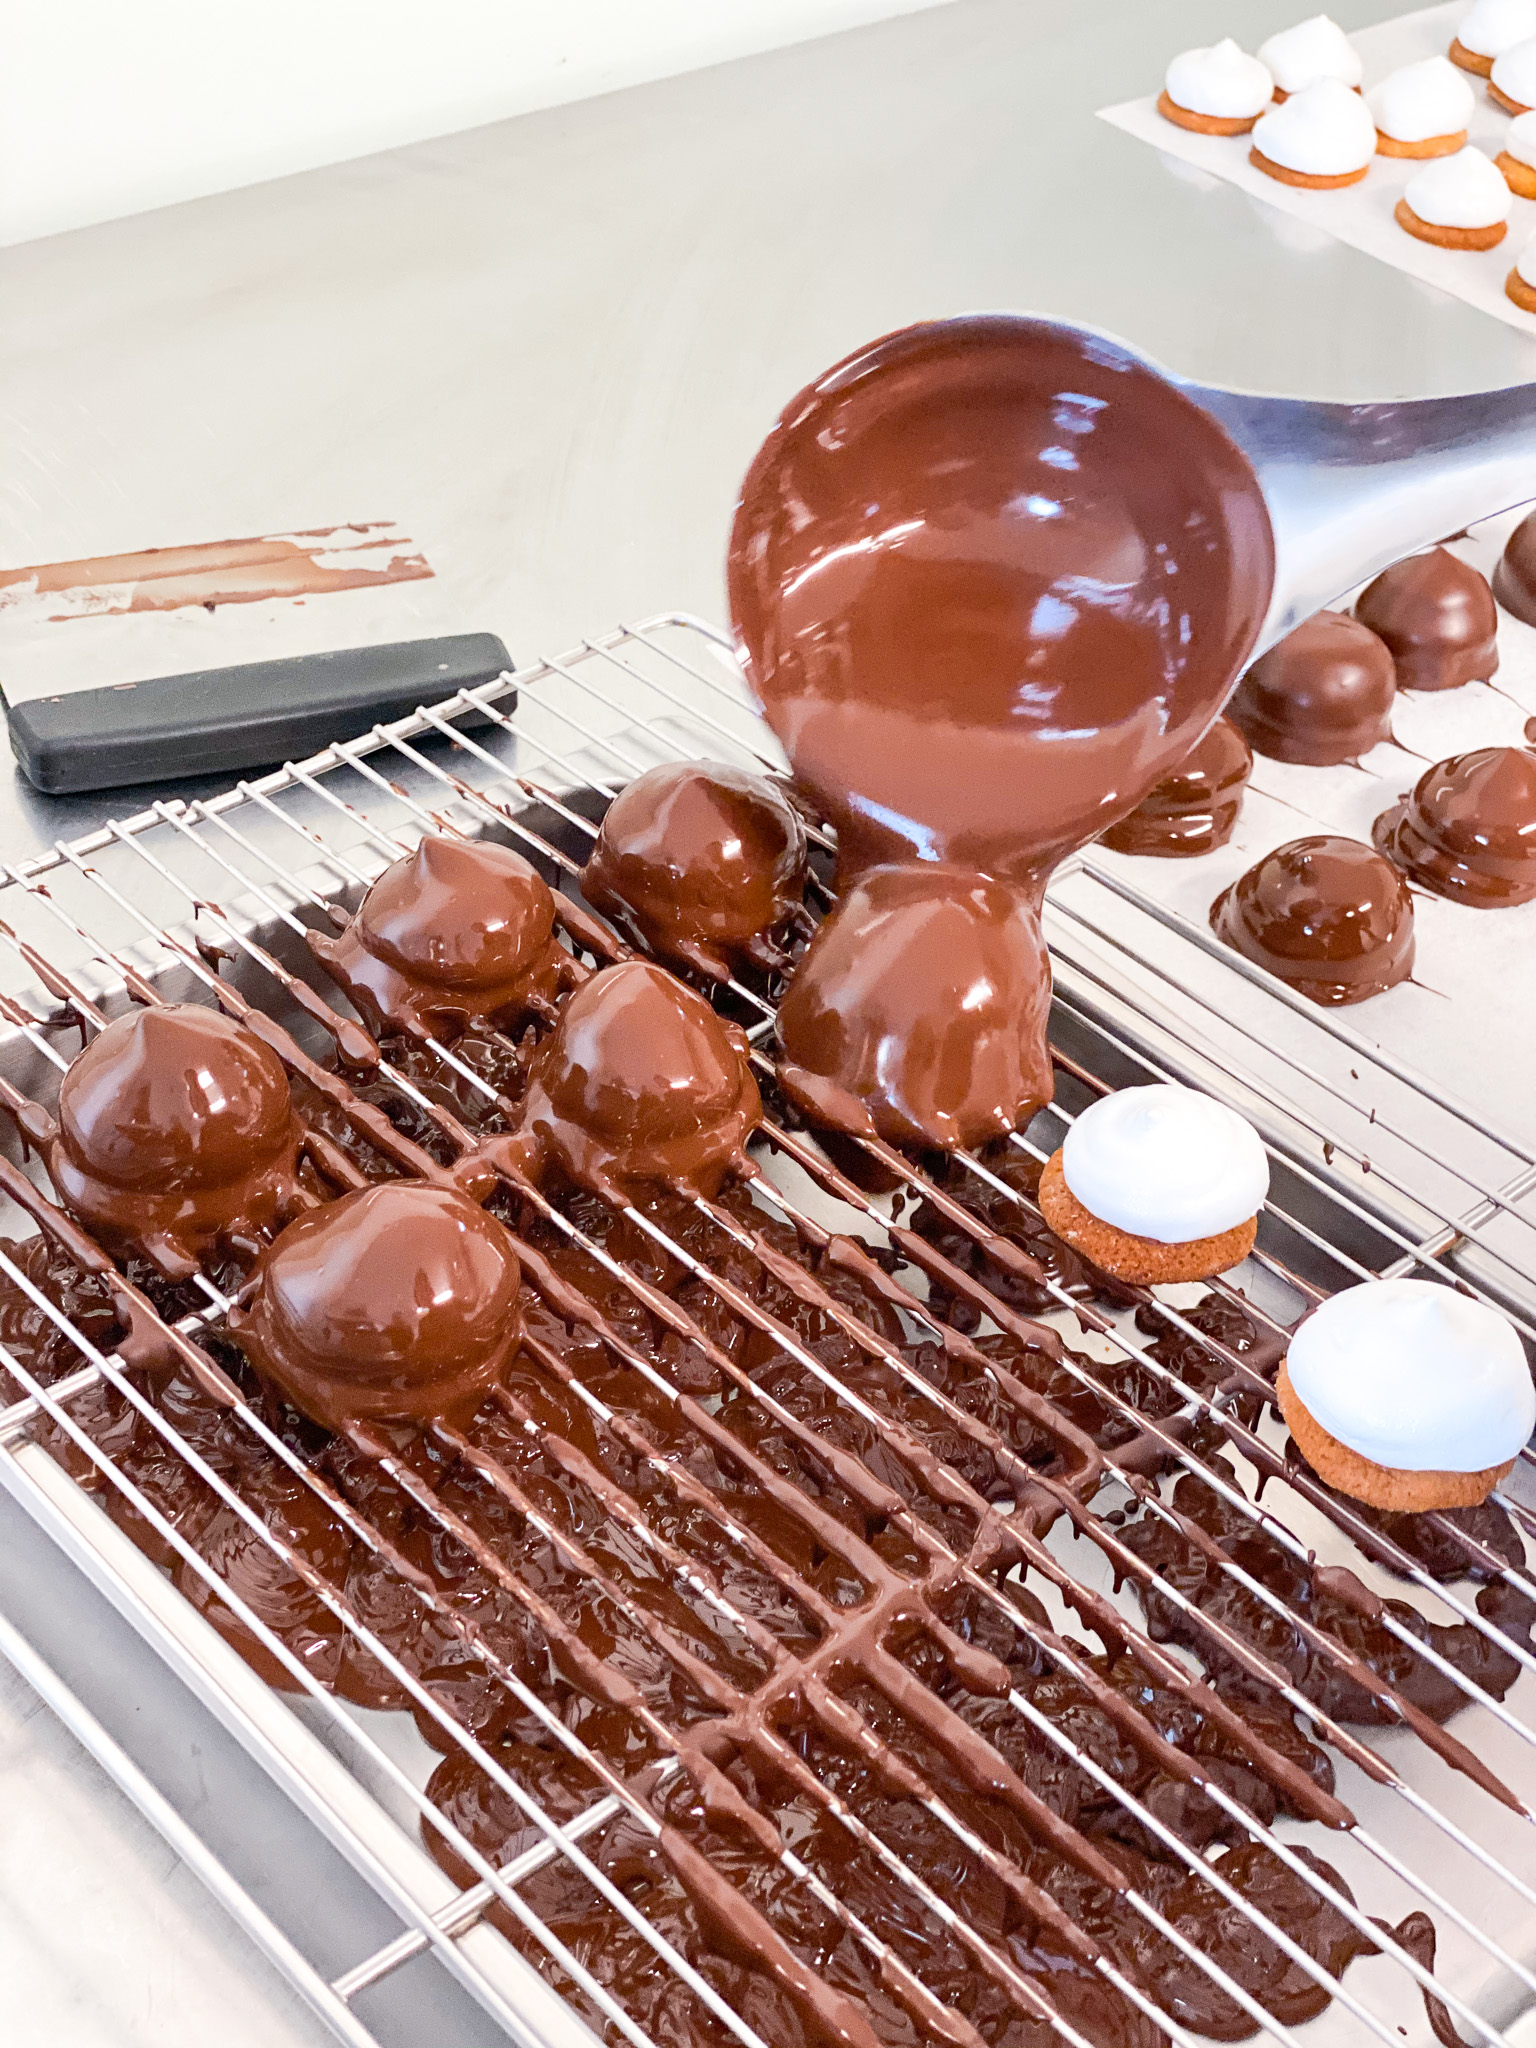 Chamalo Chocolat Chocolaterie artisanale Good Lux